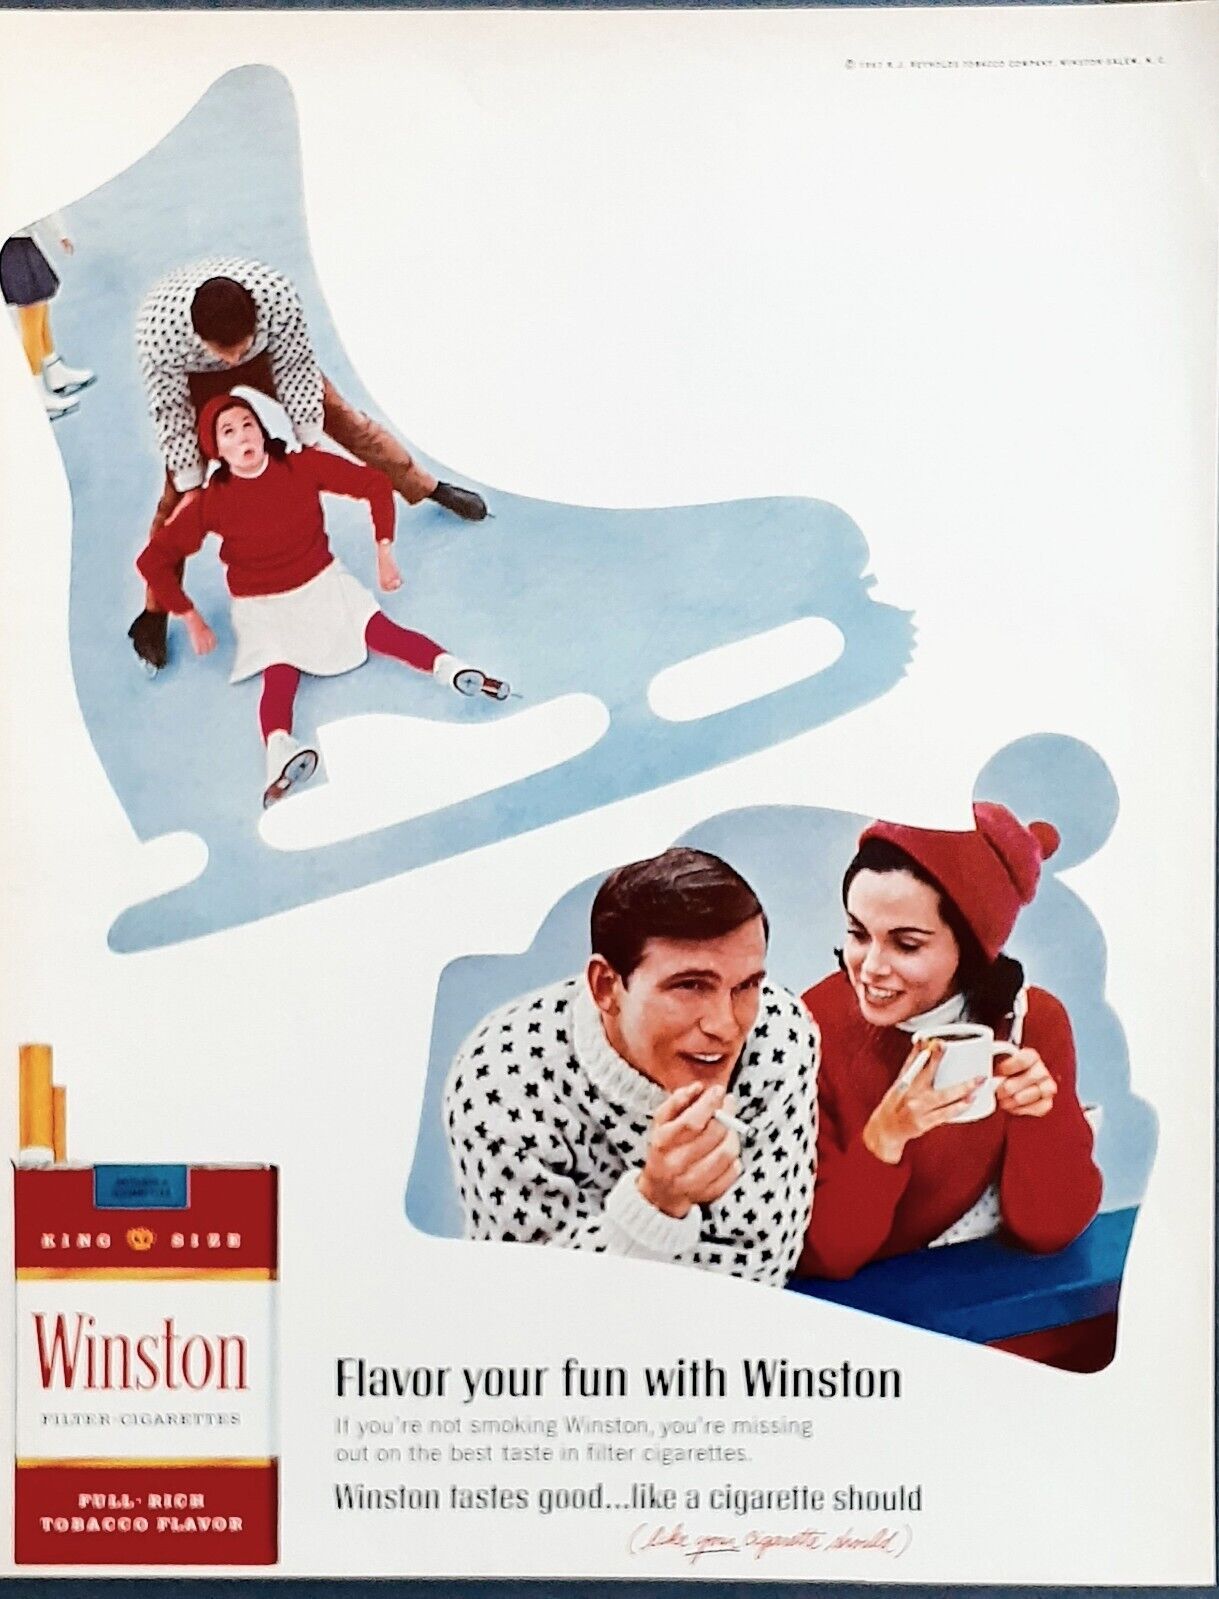 Winston cigarette ad vintage 1967 ice skate couple original advertisement